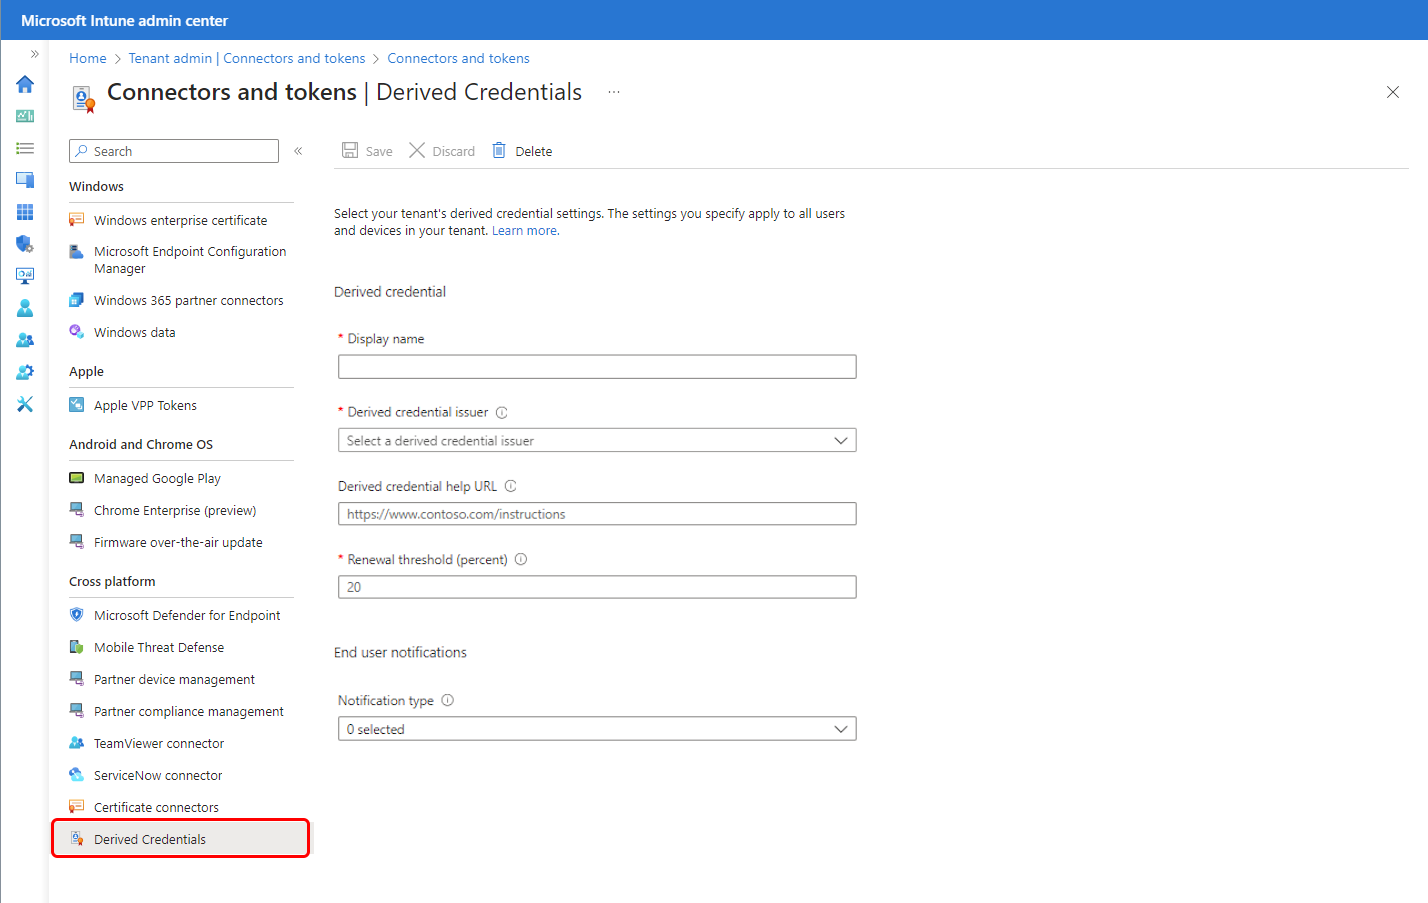 Configure derived credentials in the Microsoft Intune admin center